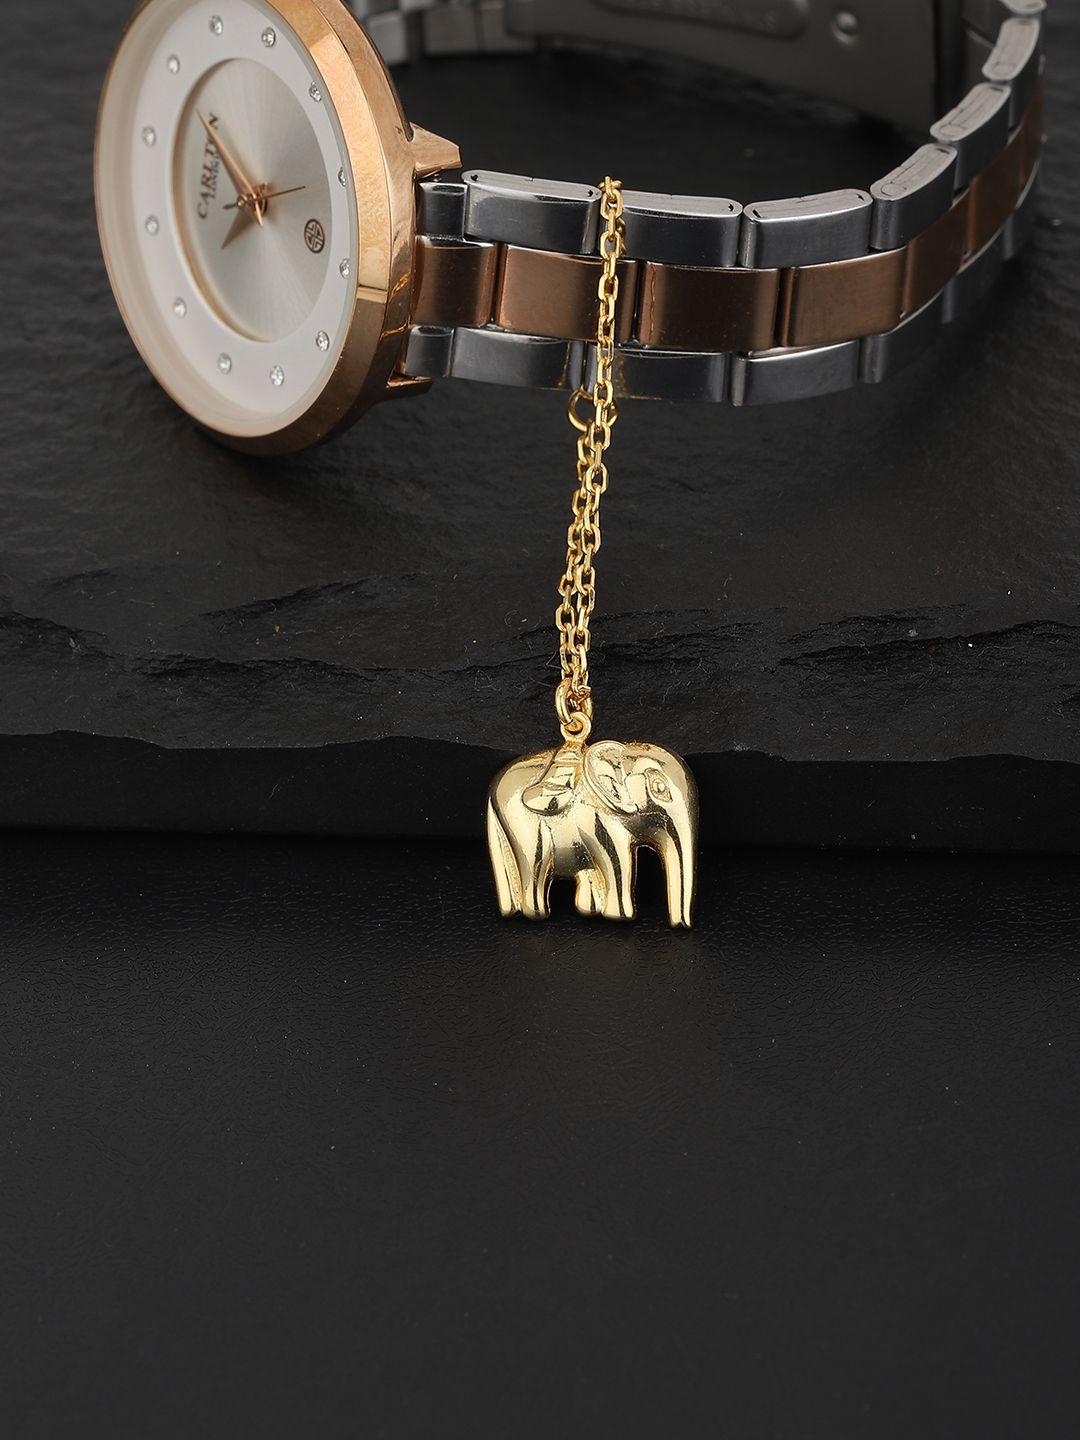 carlton-london-gold-toned-elephant-shaped-watch-charm